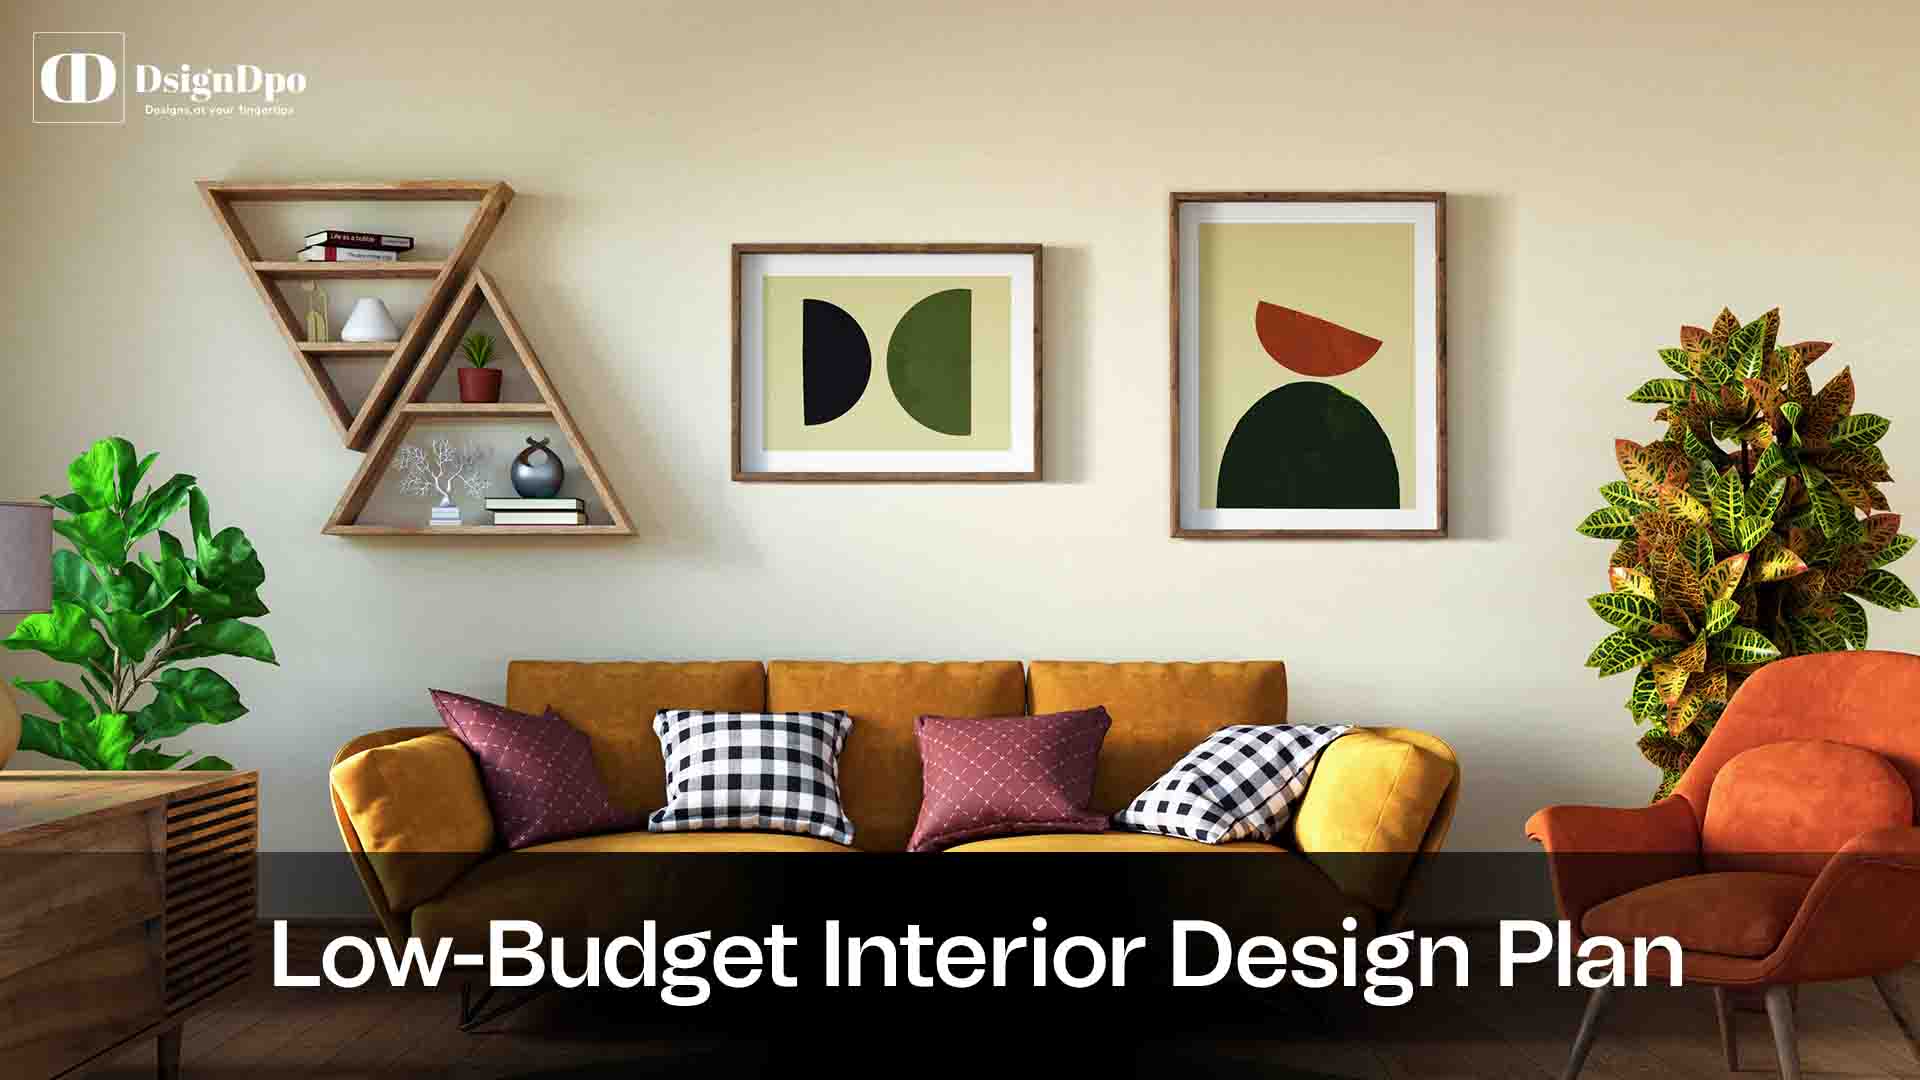 Home Interior Design With Low Budget